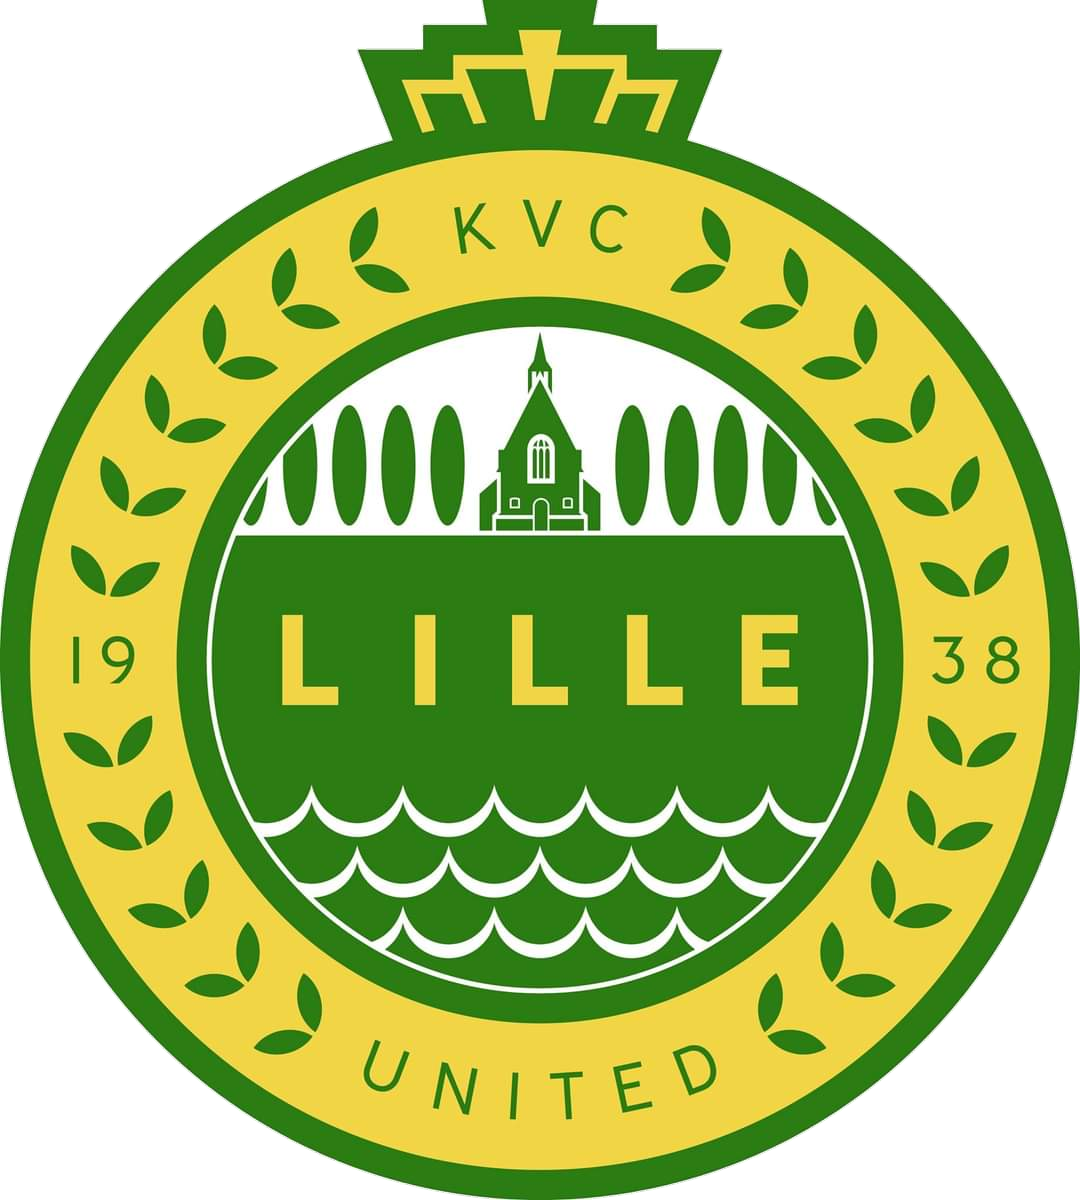 Wappen KVC Lille United  4475